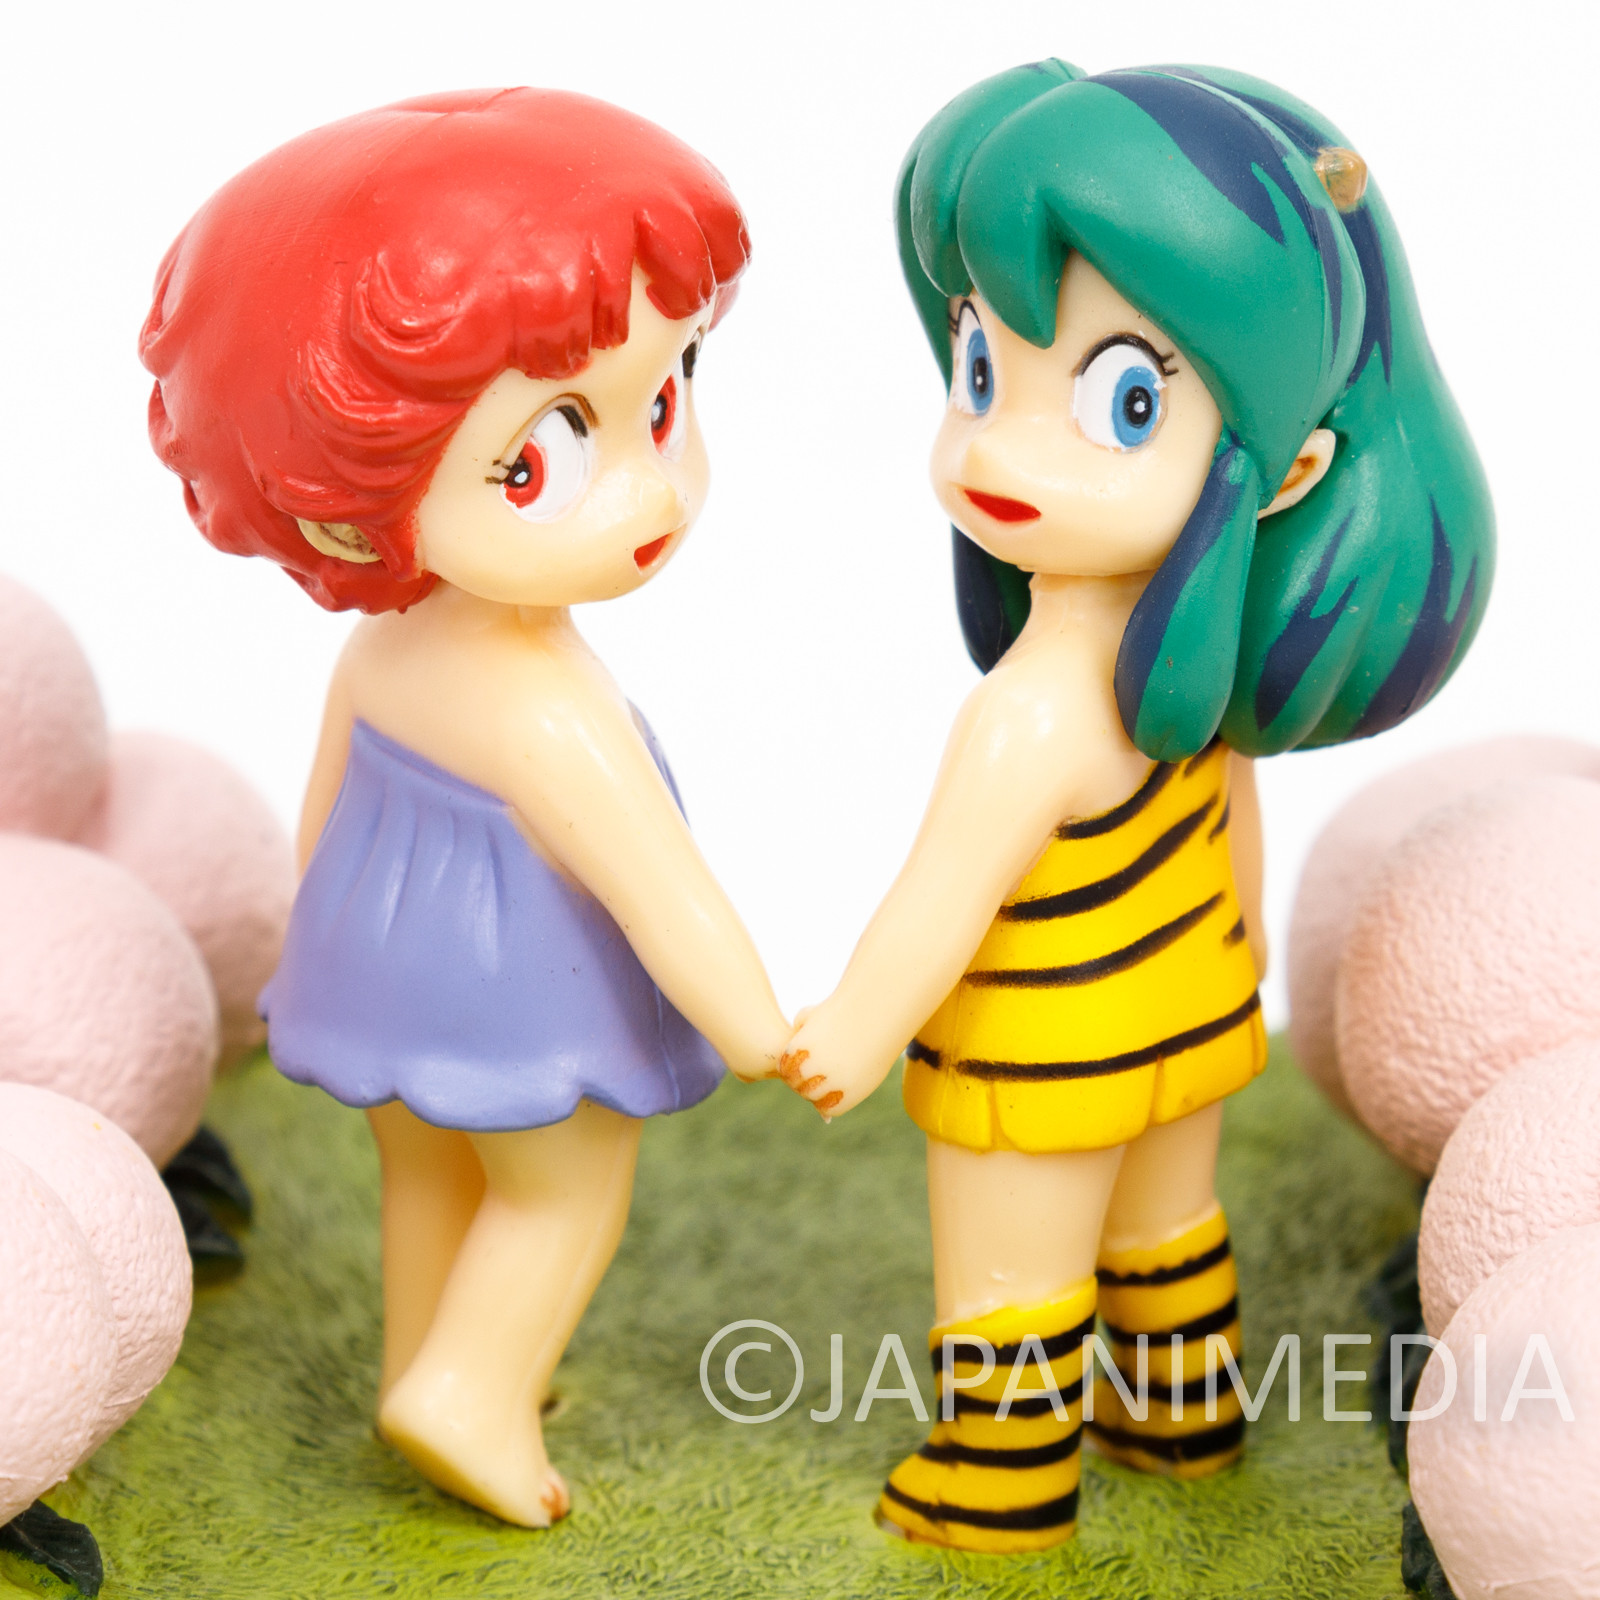 Urusei Yatsura LUM & RAN Childhood Mini Diorama Figure JAPAN ANIME MANGA